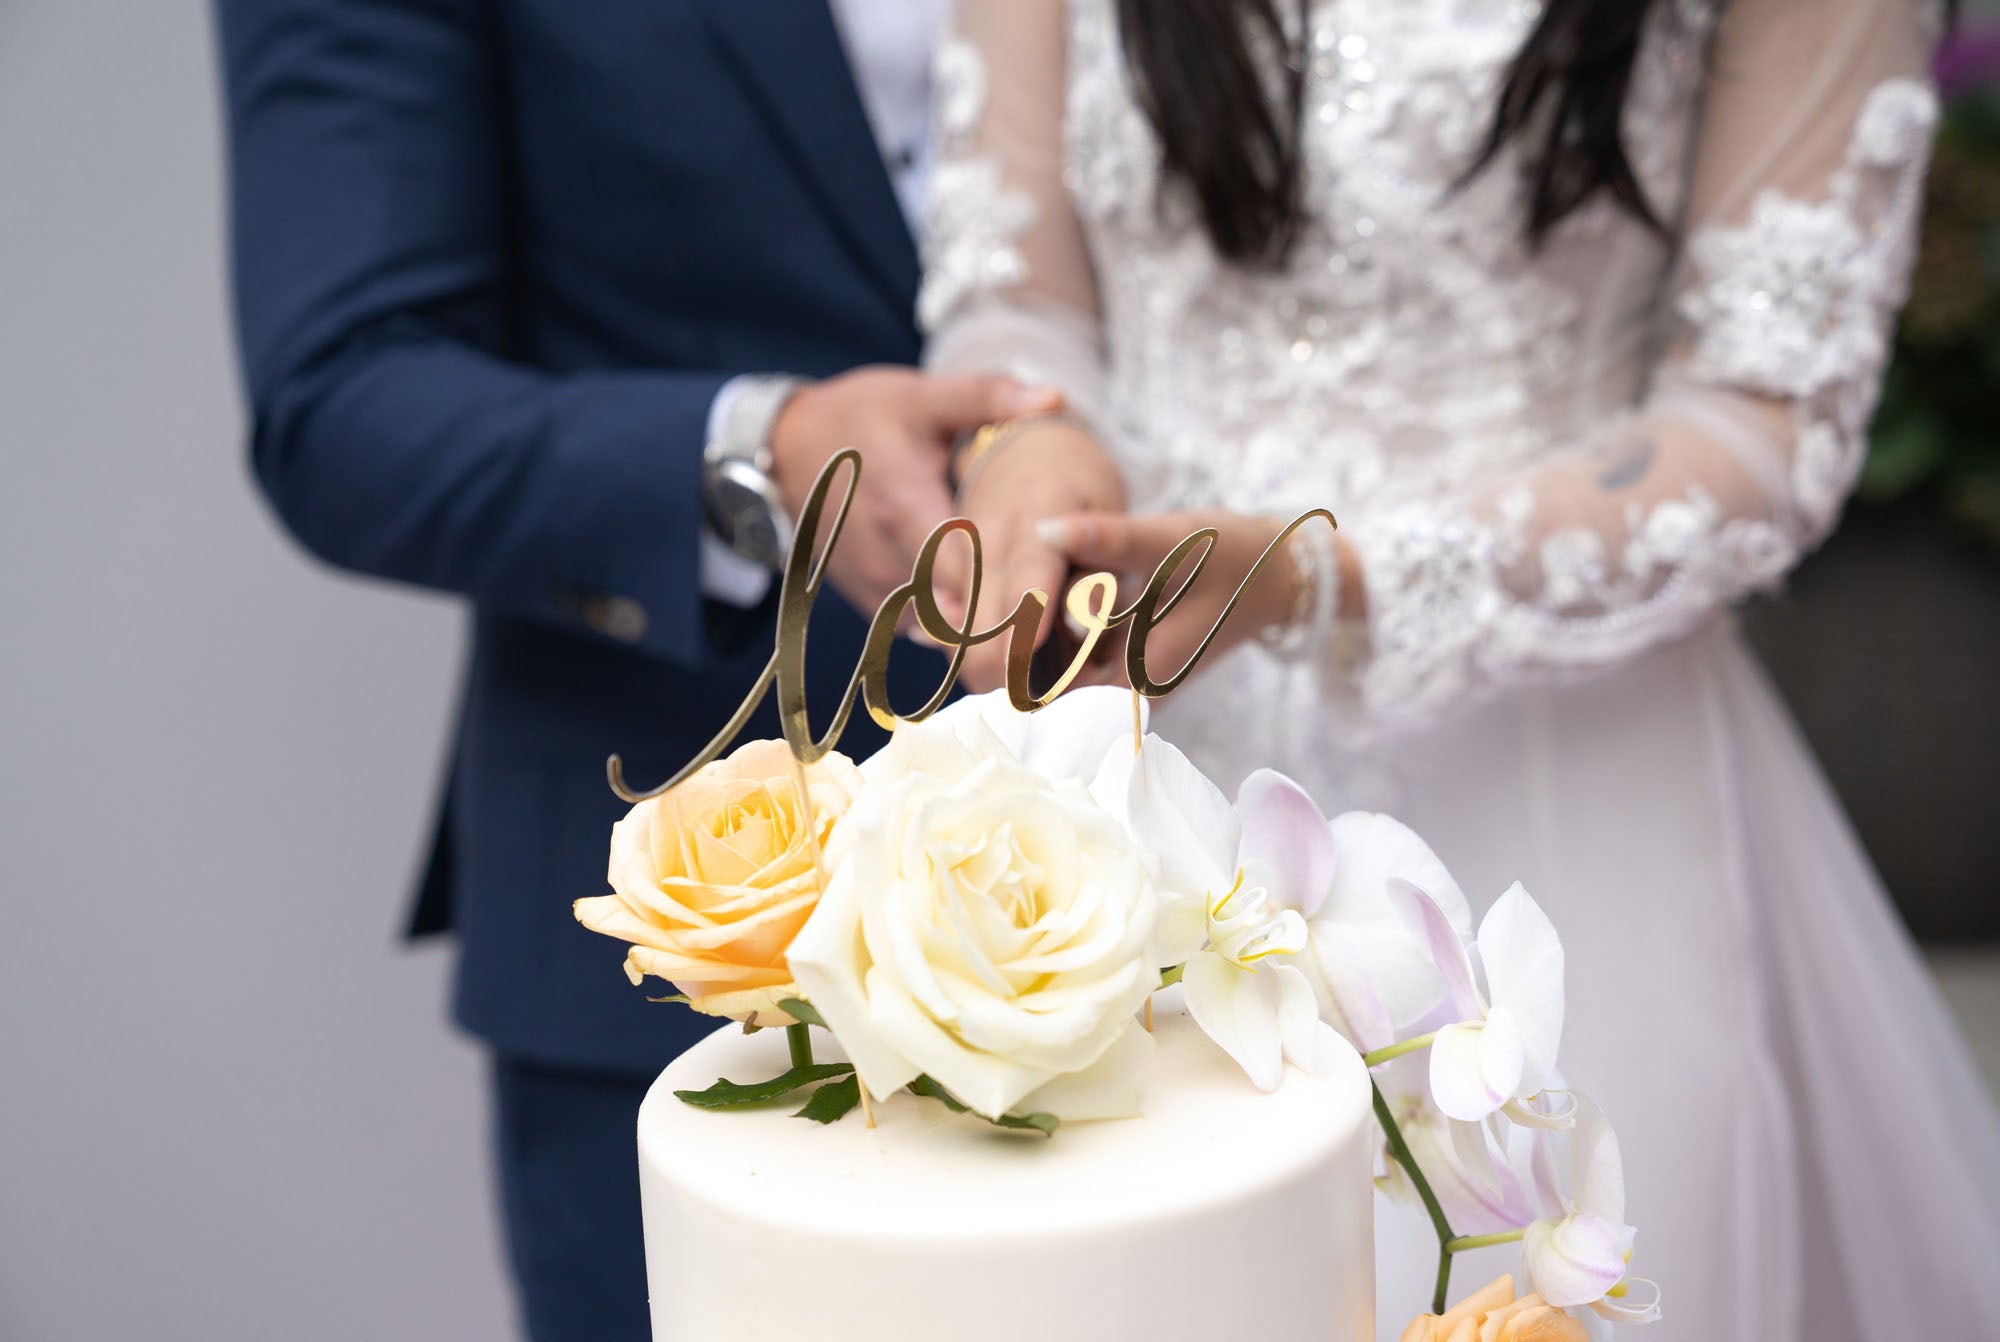 wedding cake tips and advice